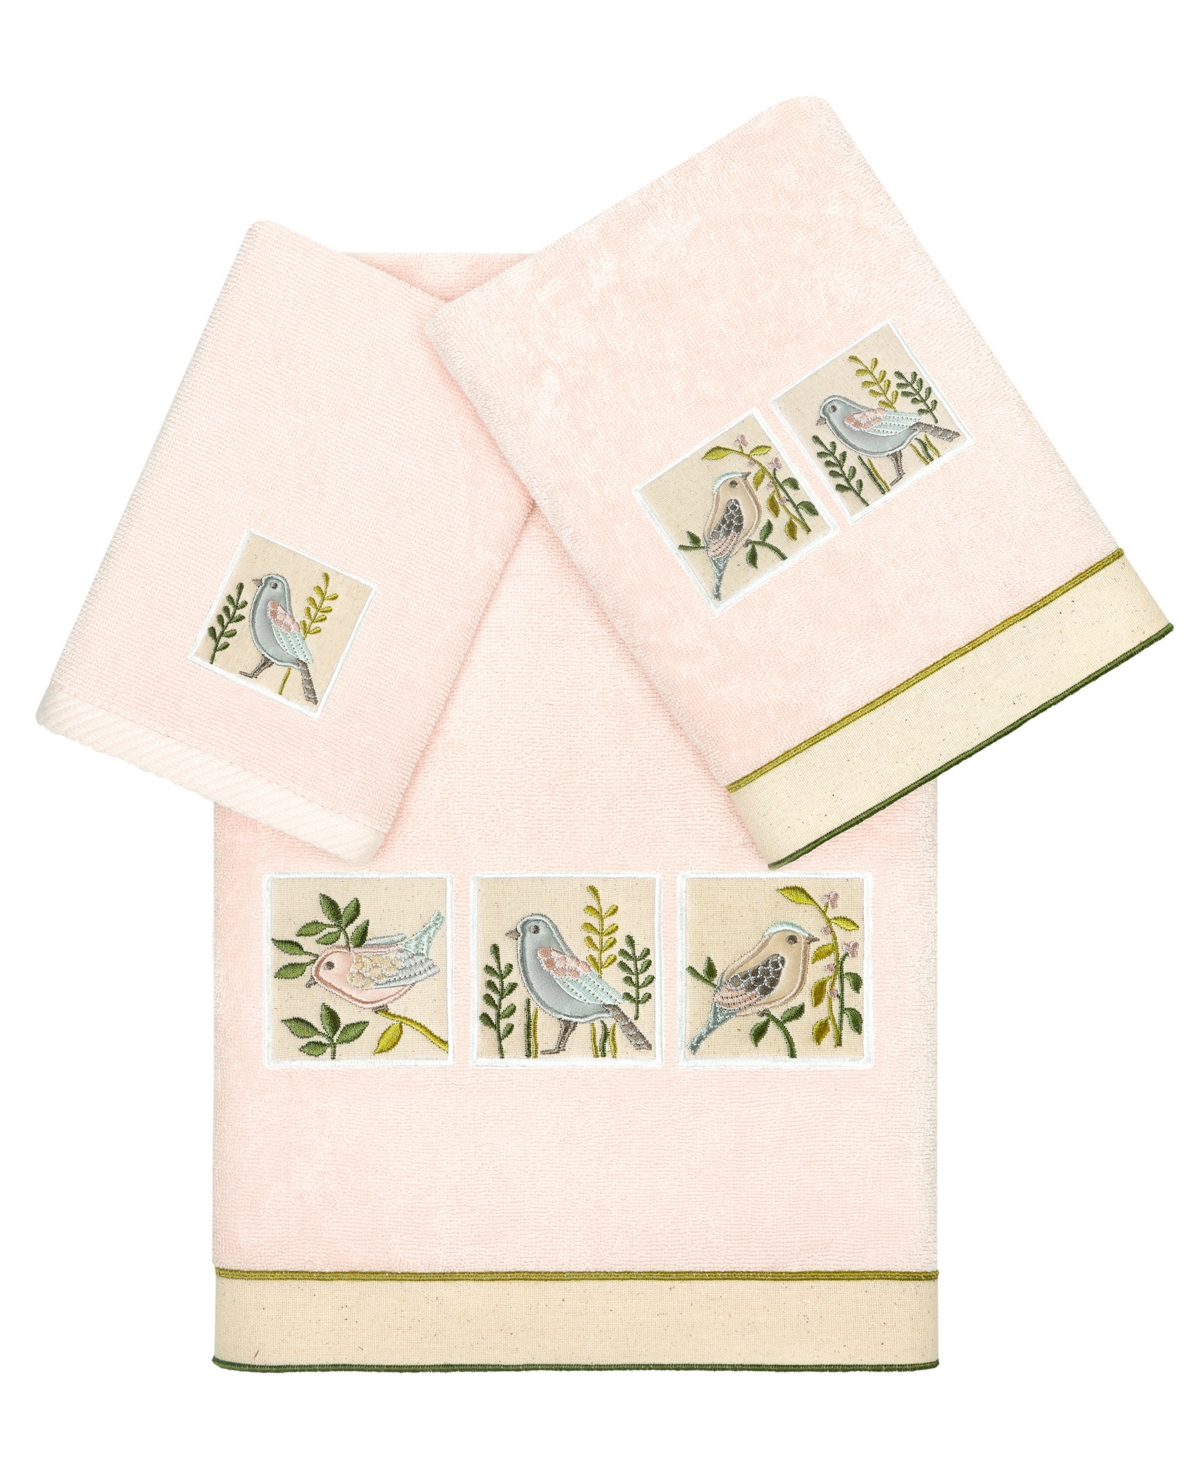 Linum Home Textiles Turkish Cotton Belinda Embellished Towel Set, 3 Piece Bedding In Blush